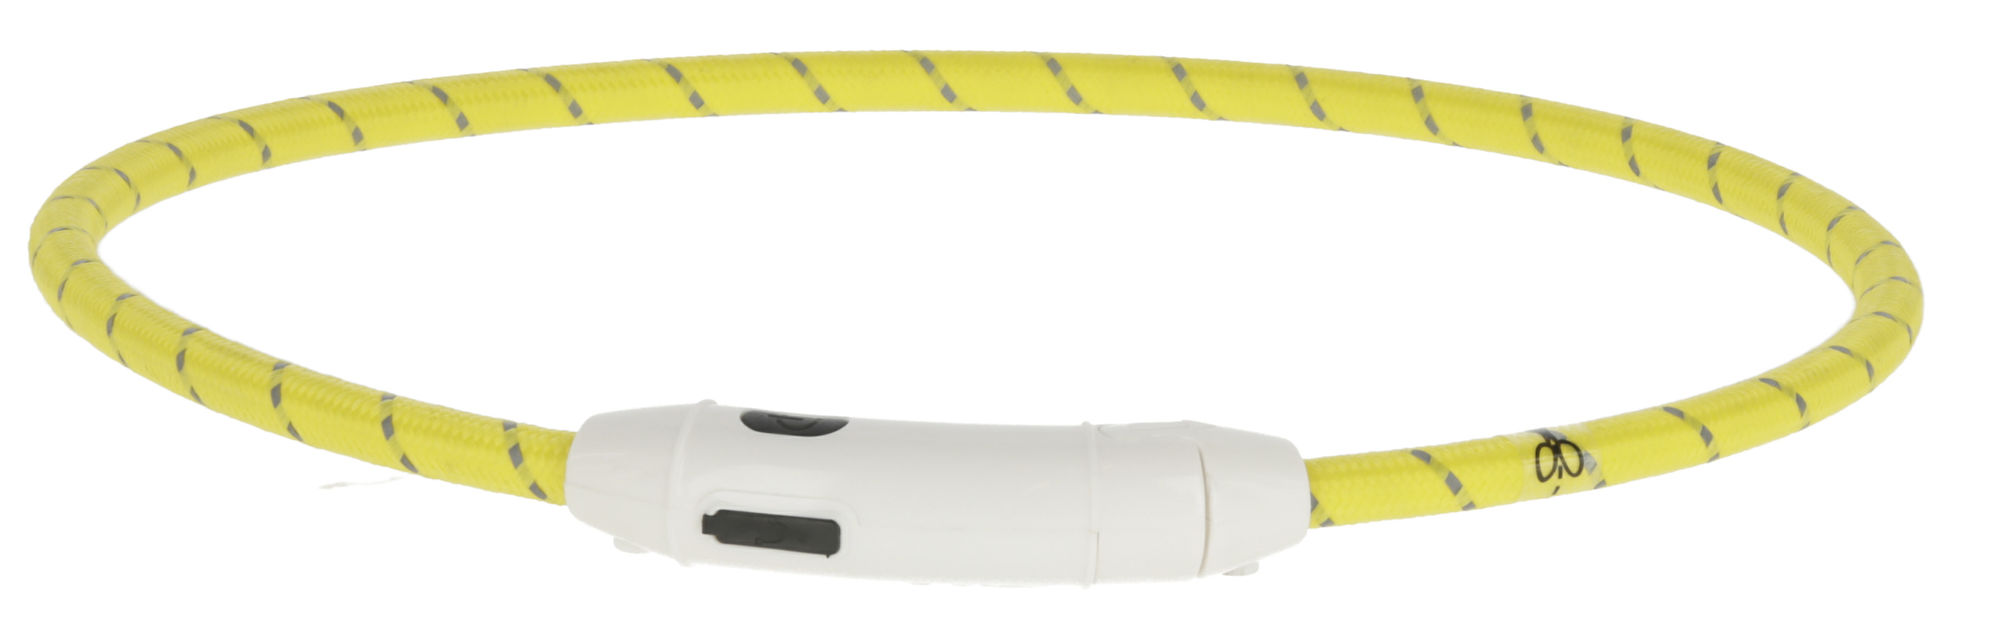 Maxi Safe LED-Halsband, Nylon, Länge 65 cm